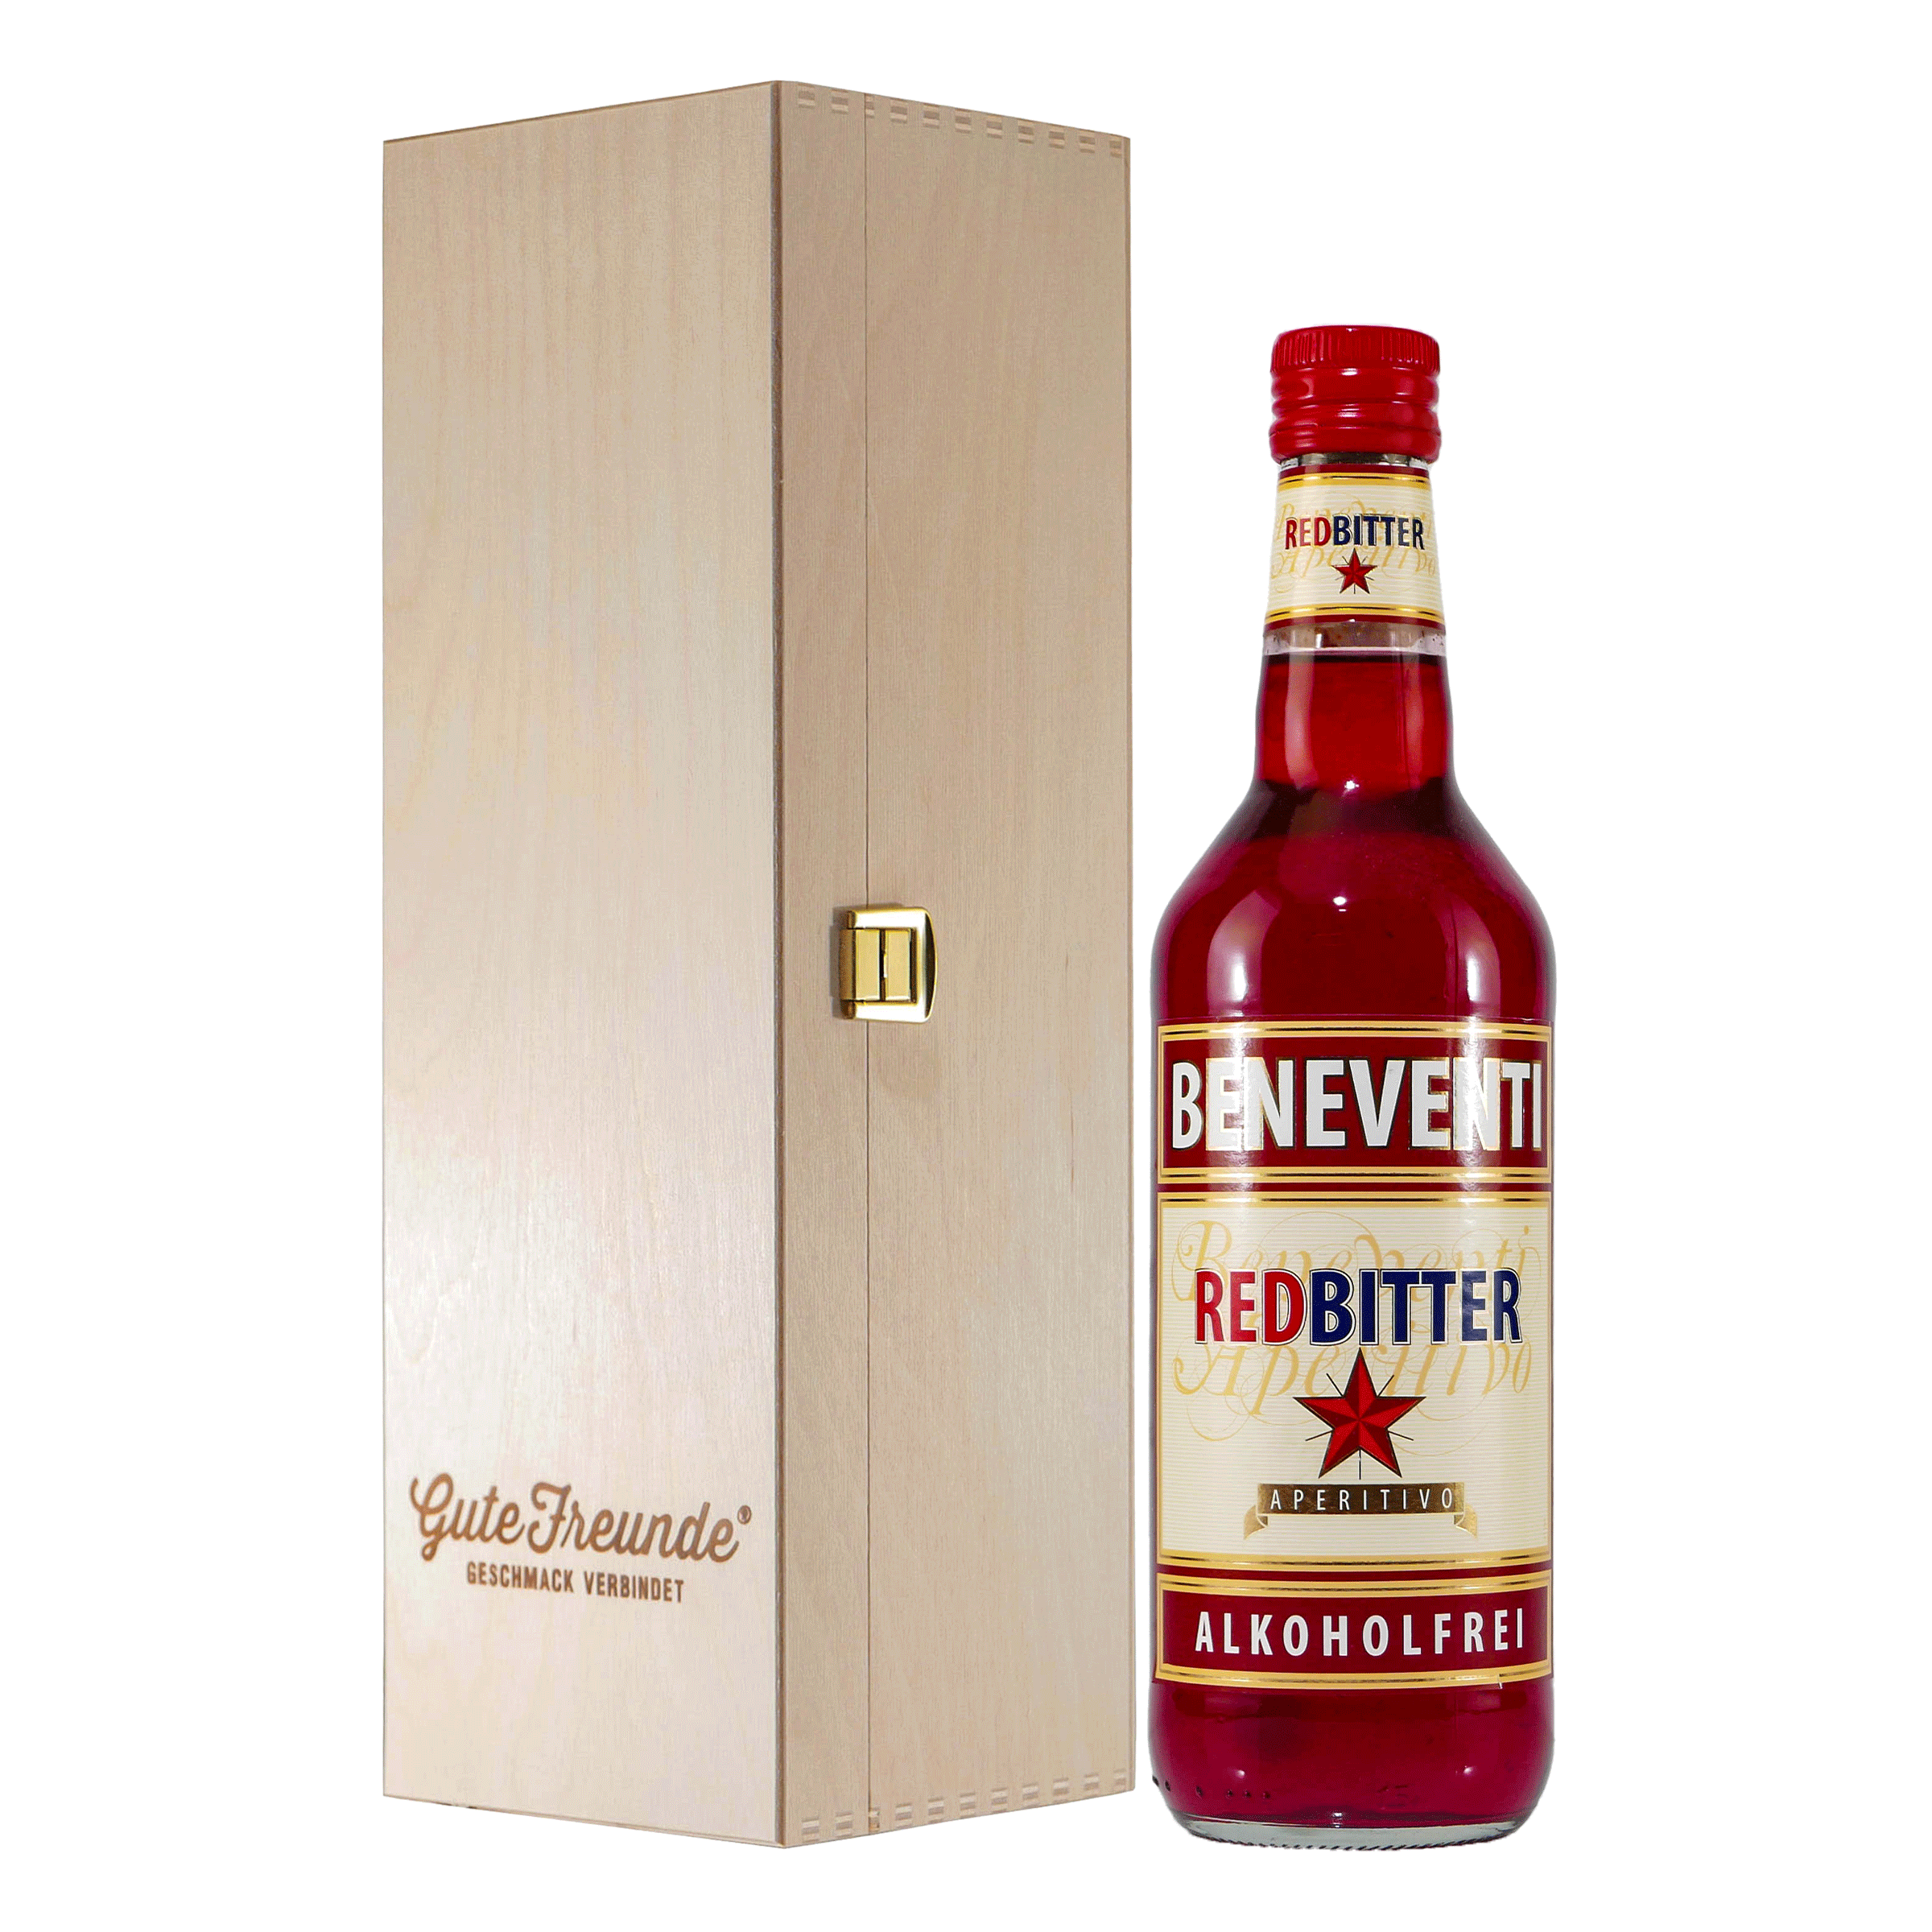 Beneventi Red Bitter Aperitivo -alkoholfrei- mit Geschenk-HK